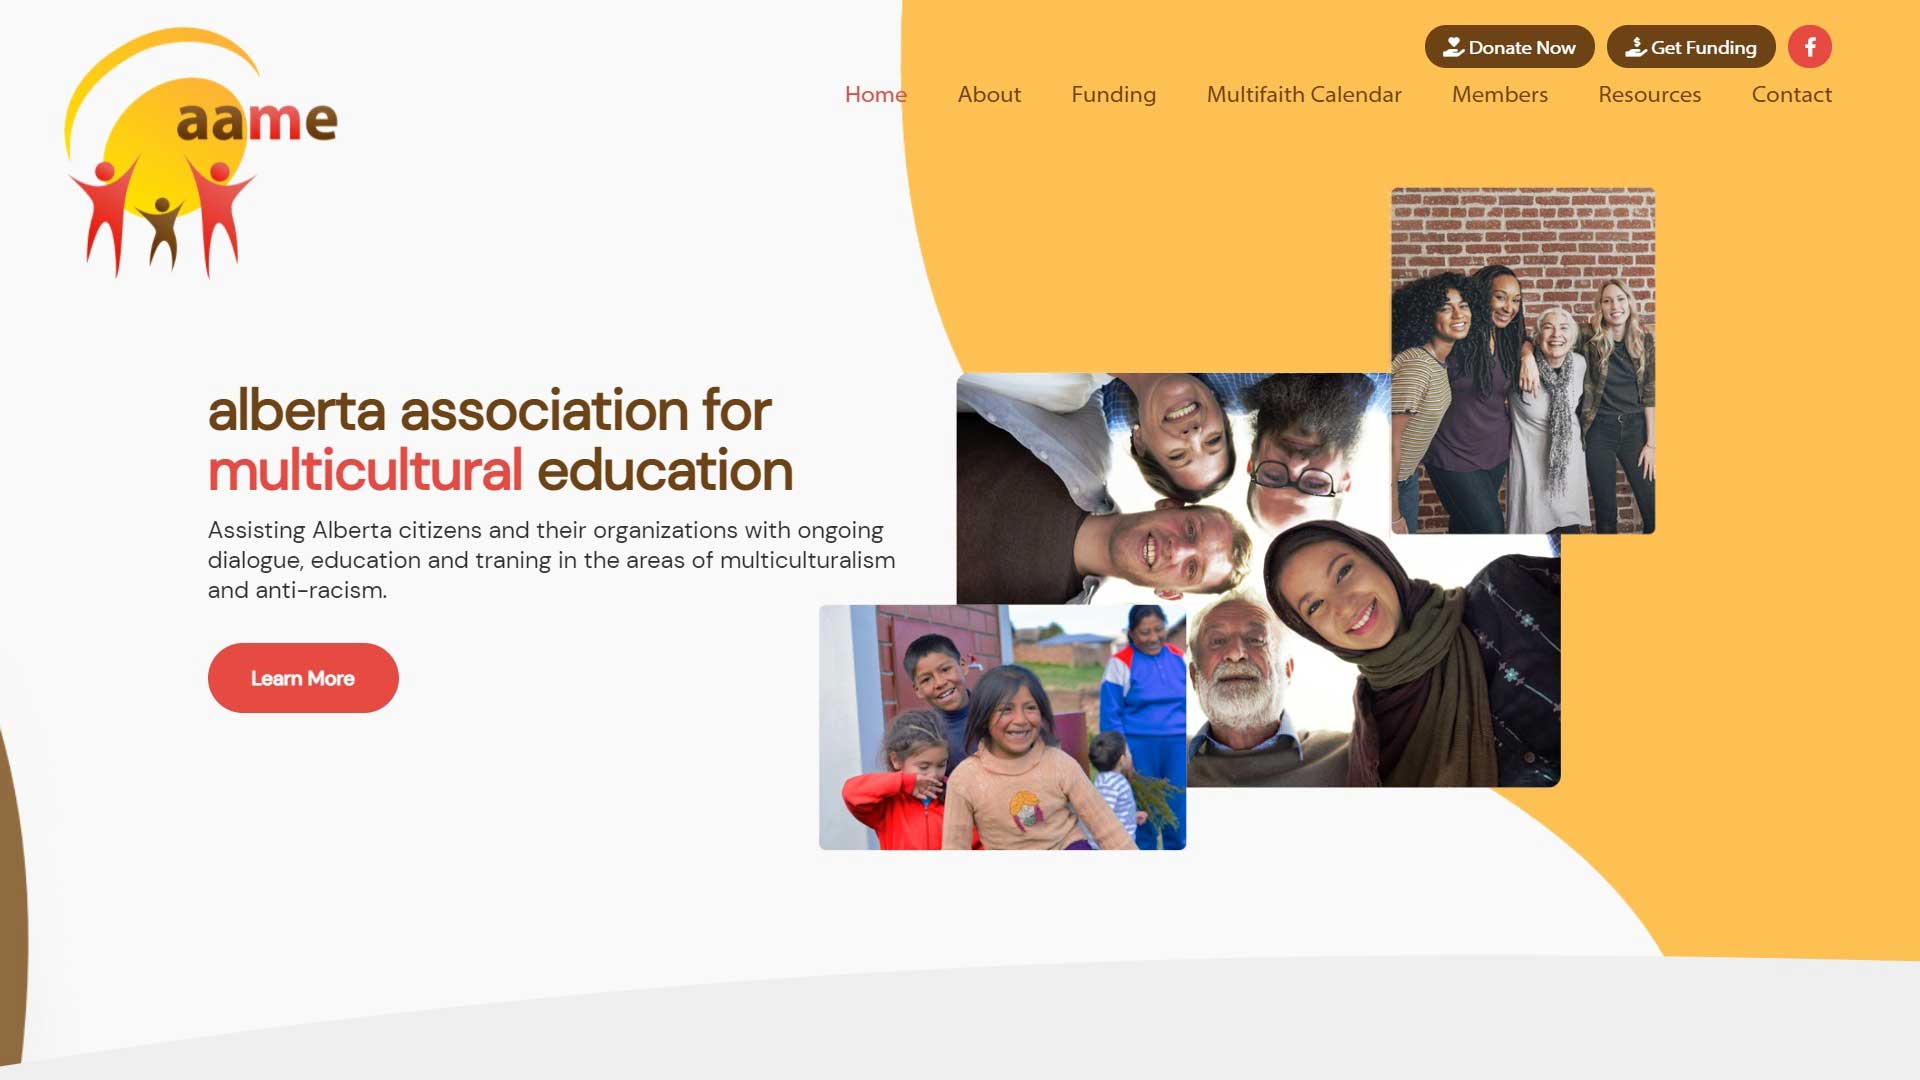 alberta-association-for-multicultural-education-2021